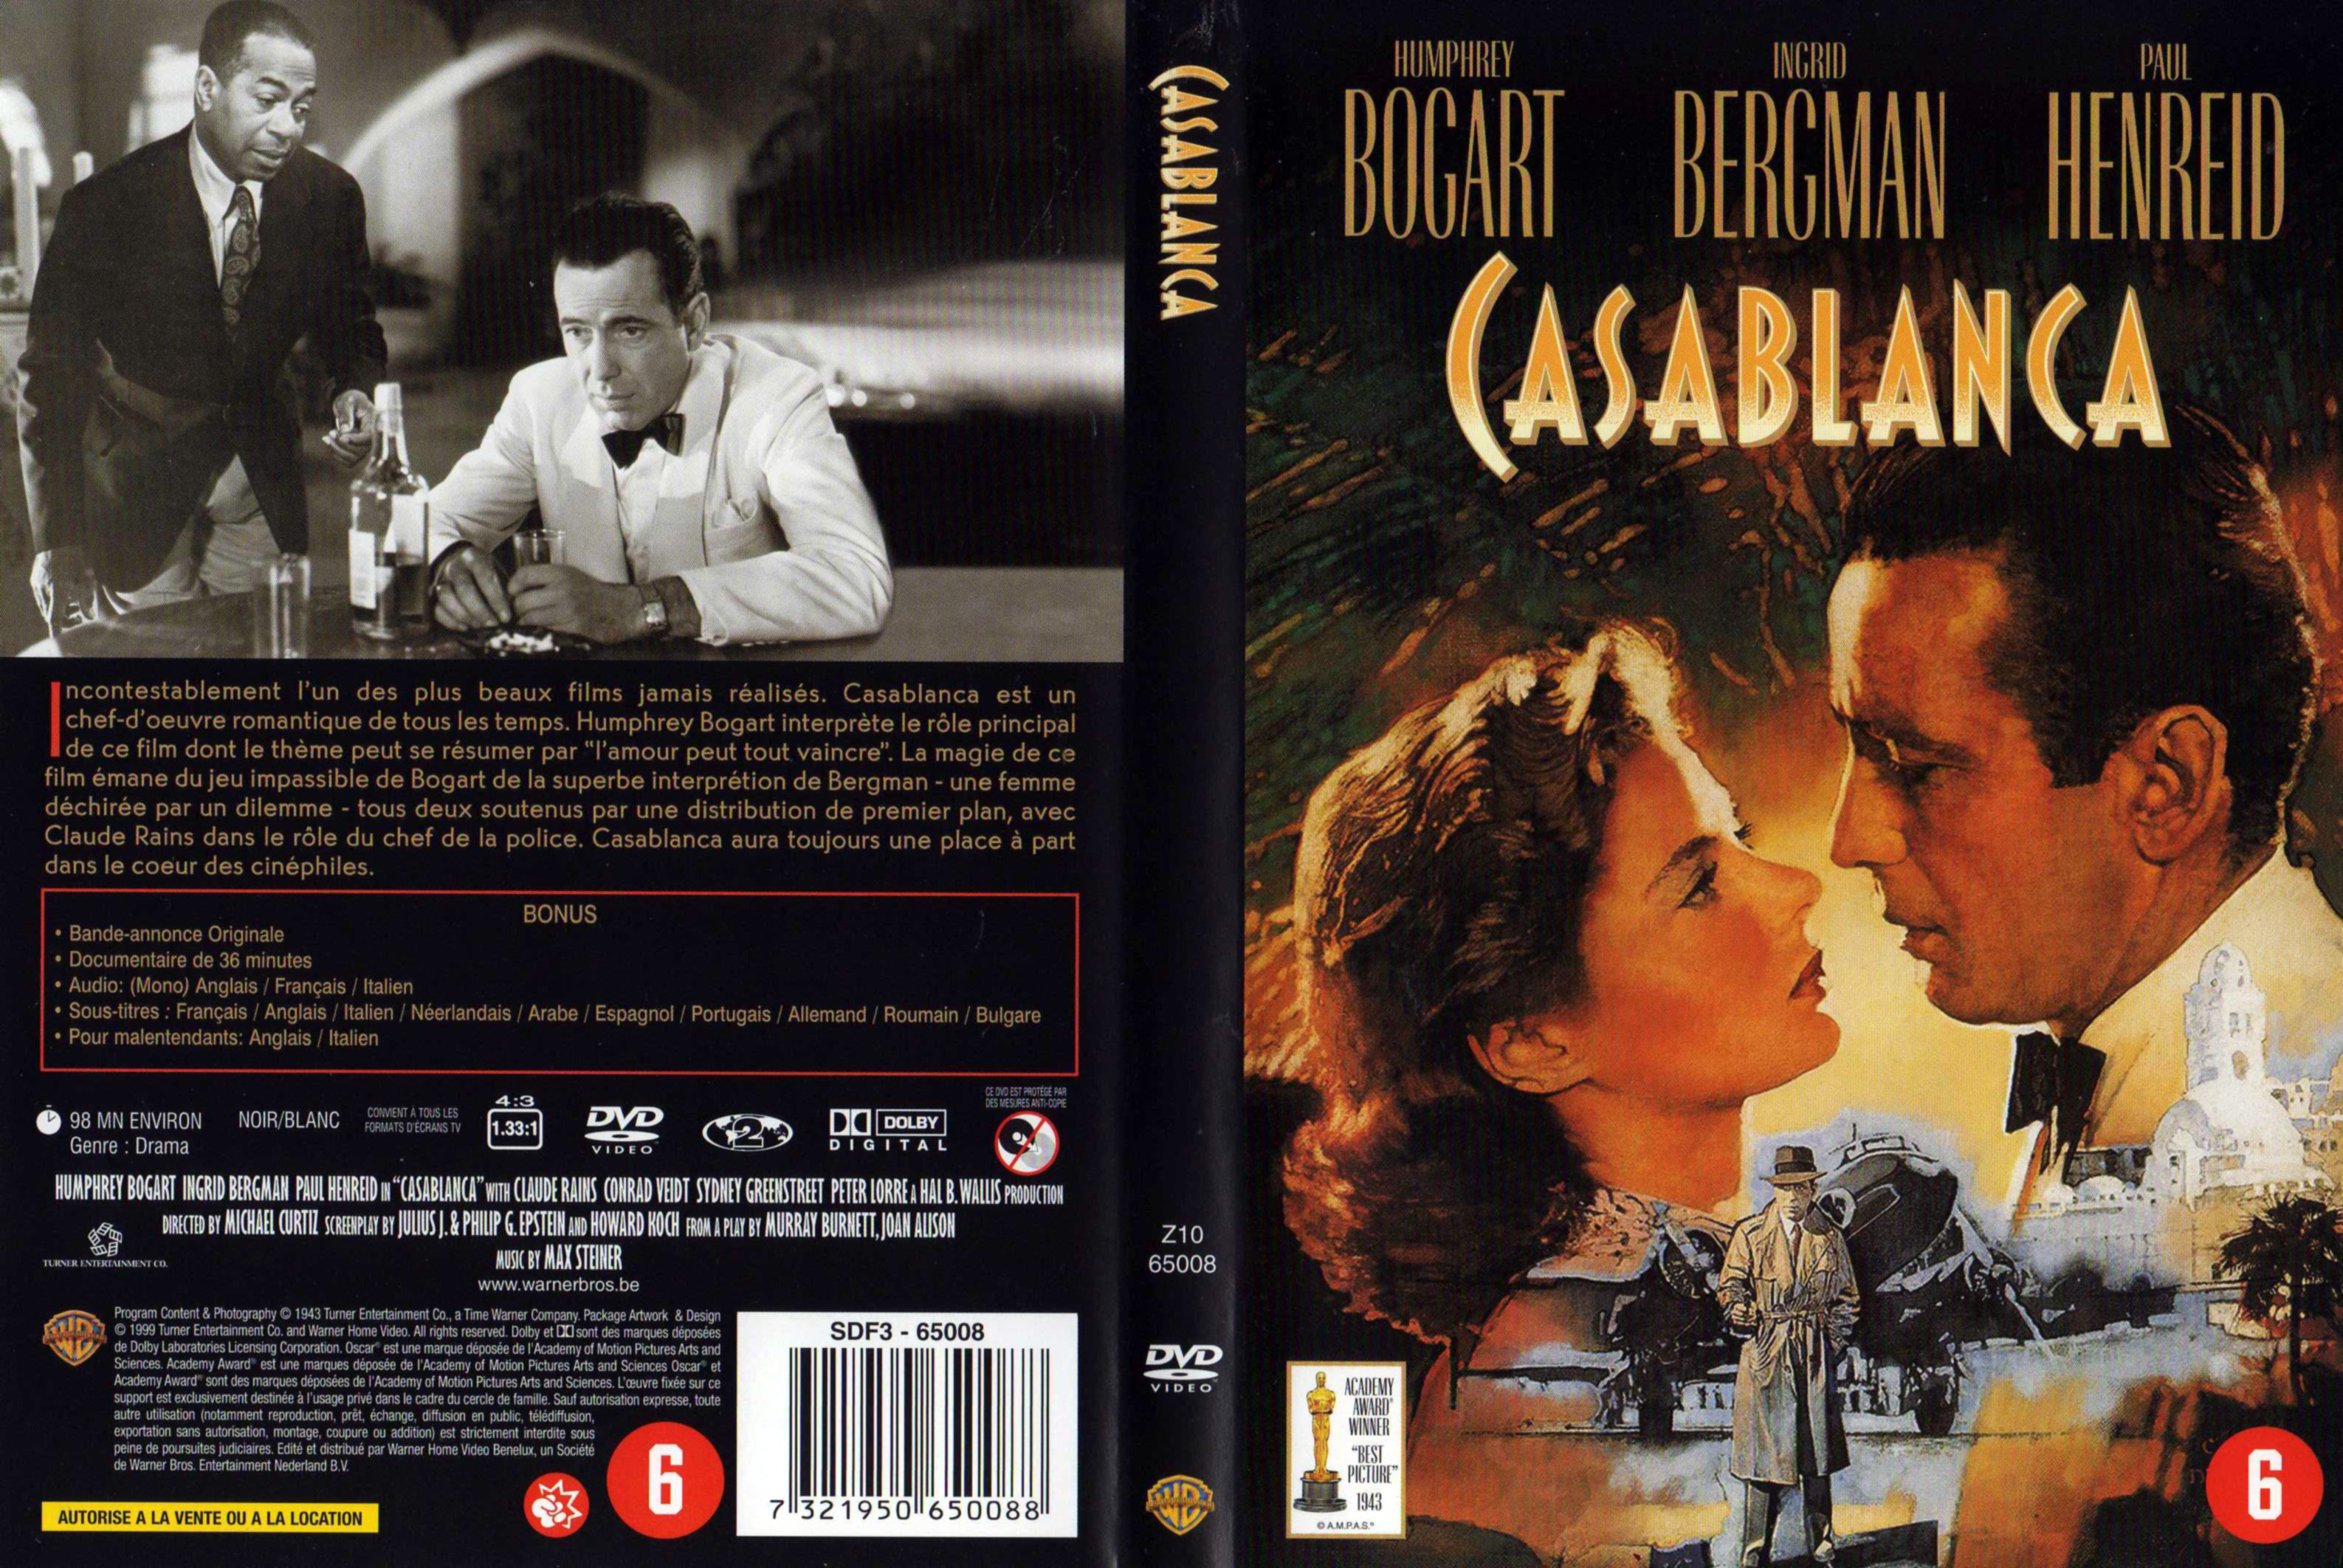 Jaquette DVD Casablanca v2